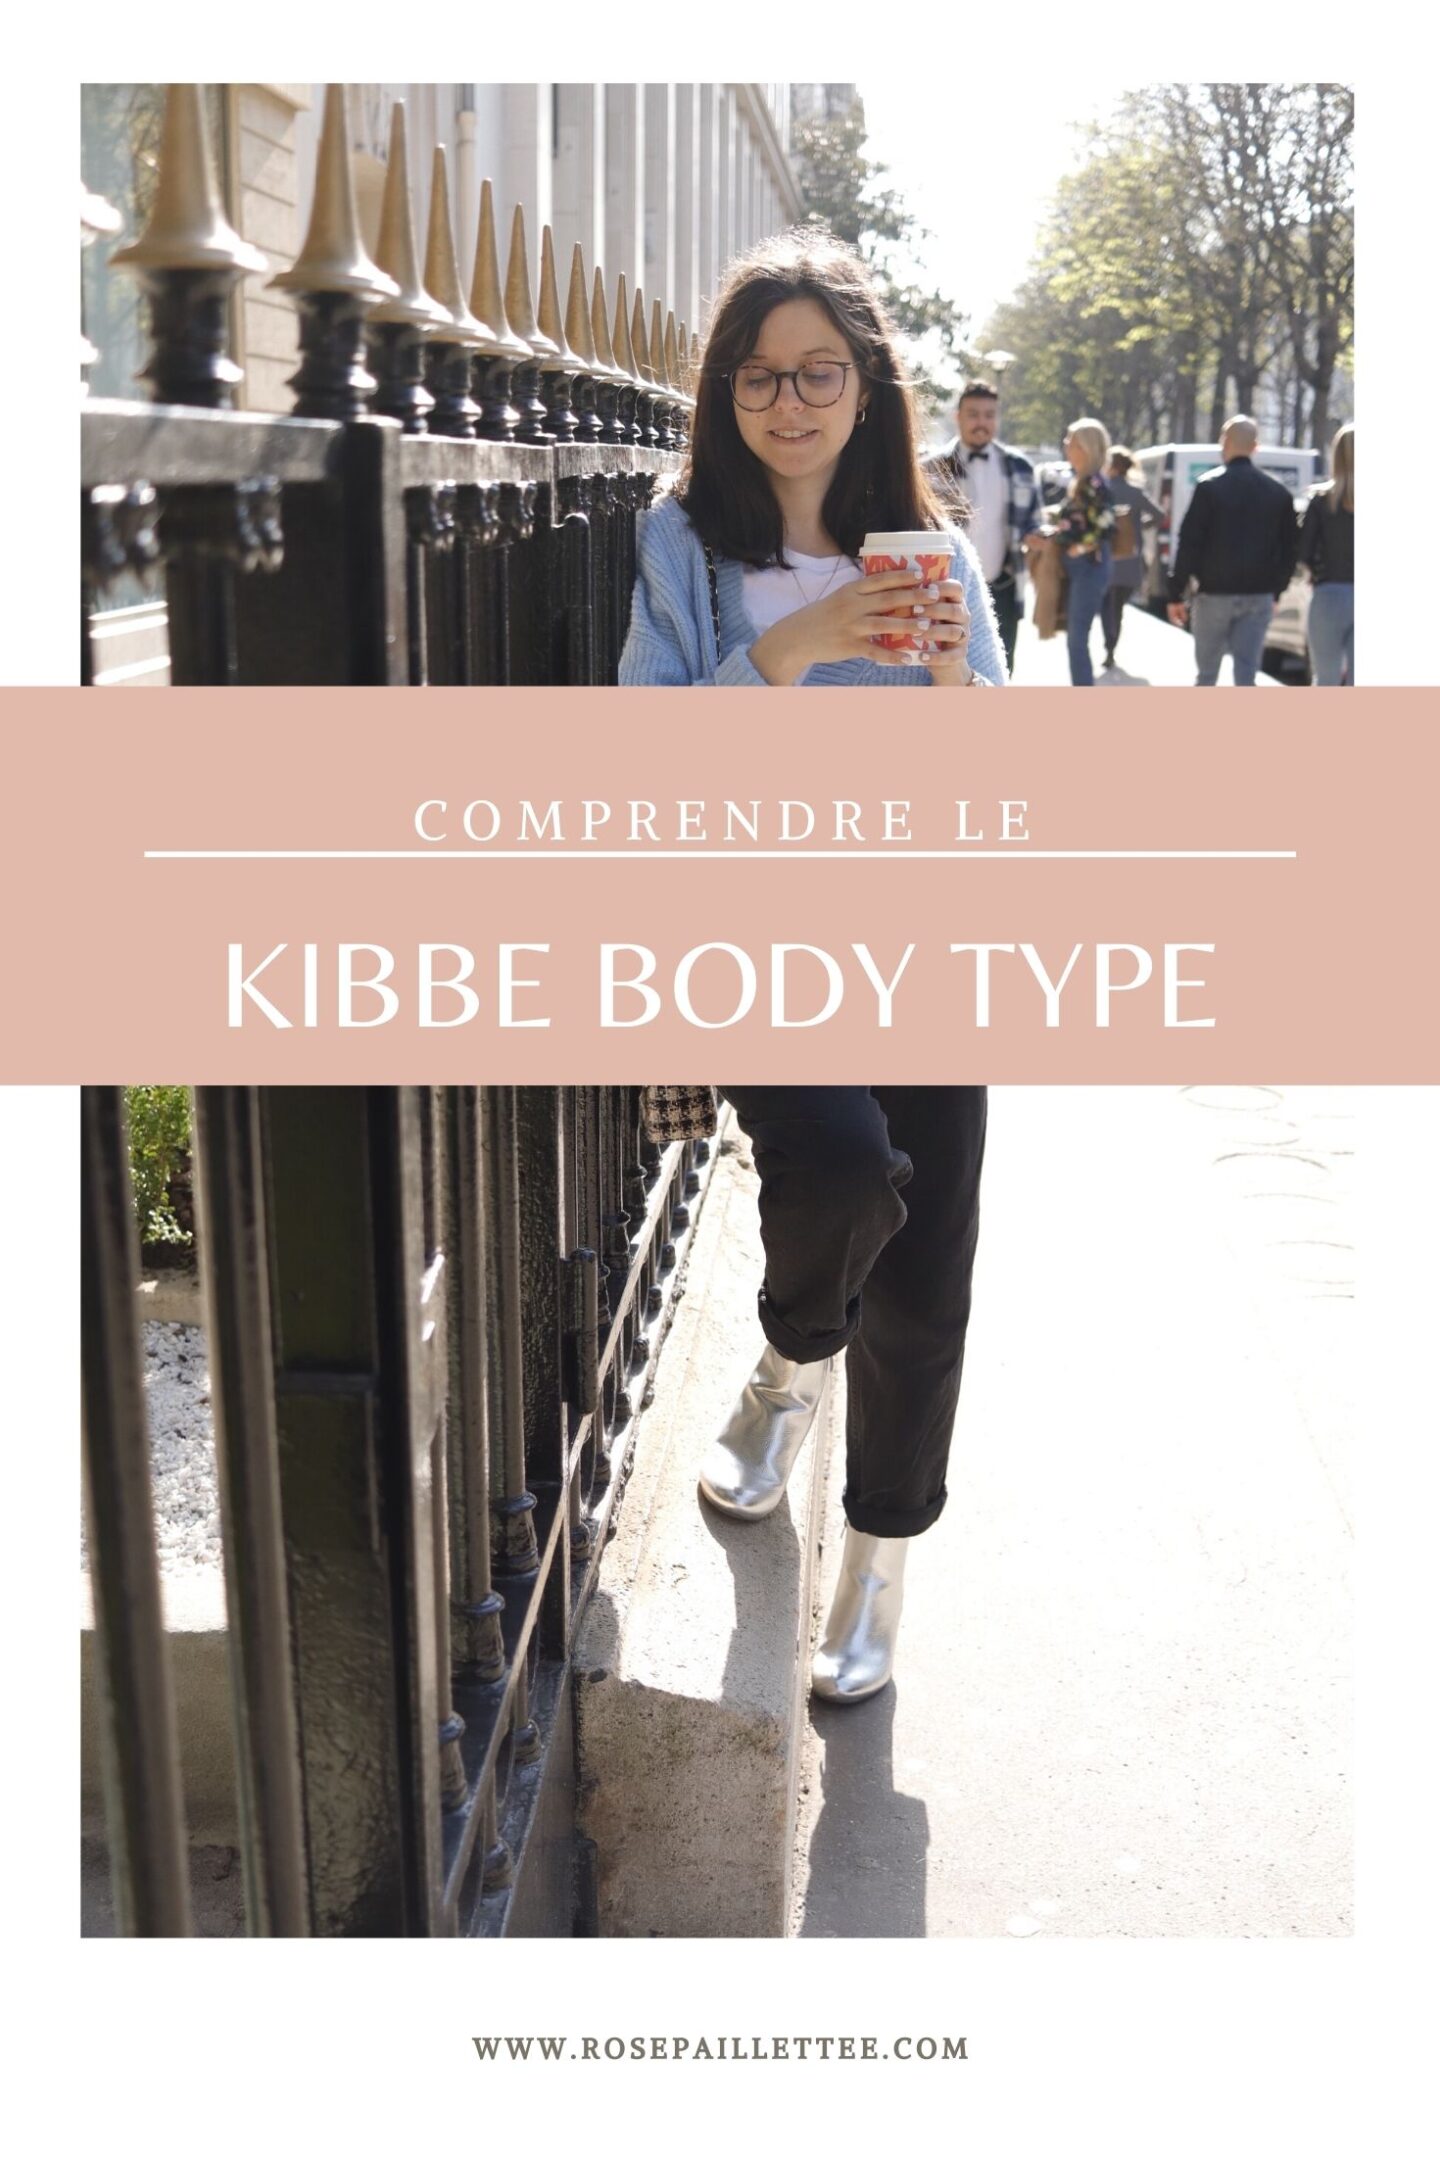 Comprendre le kibbe body type